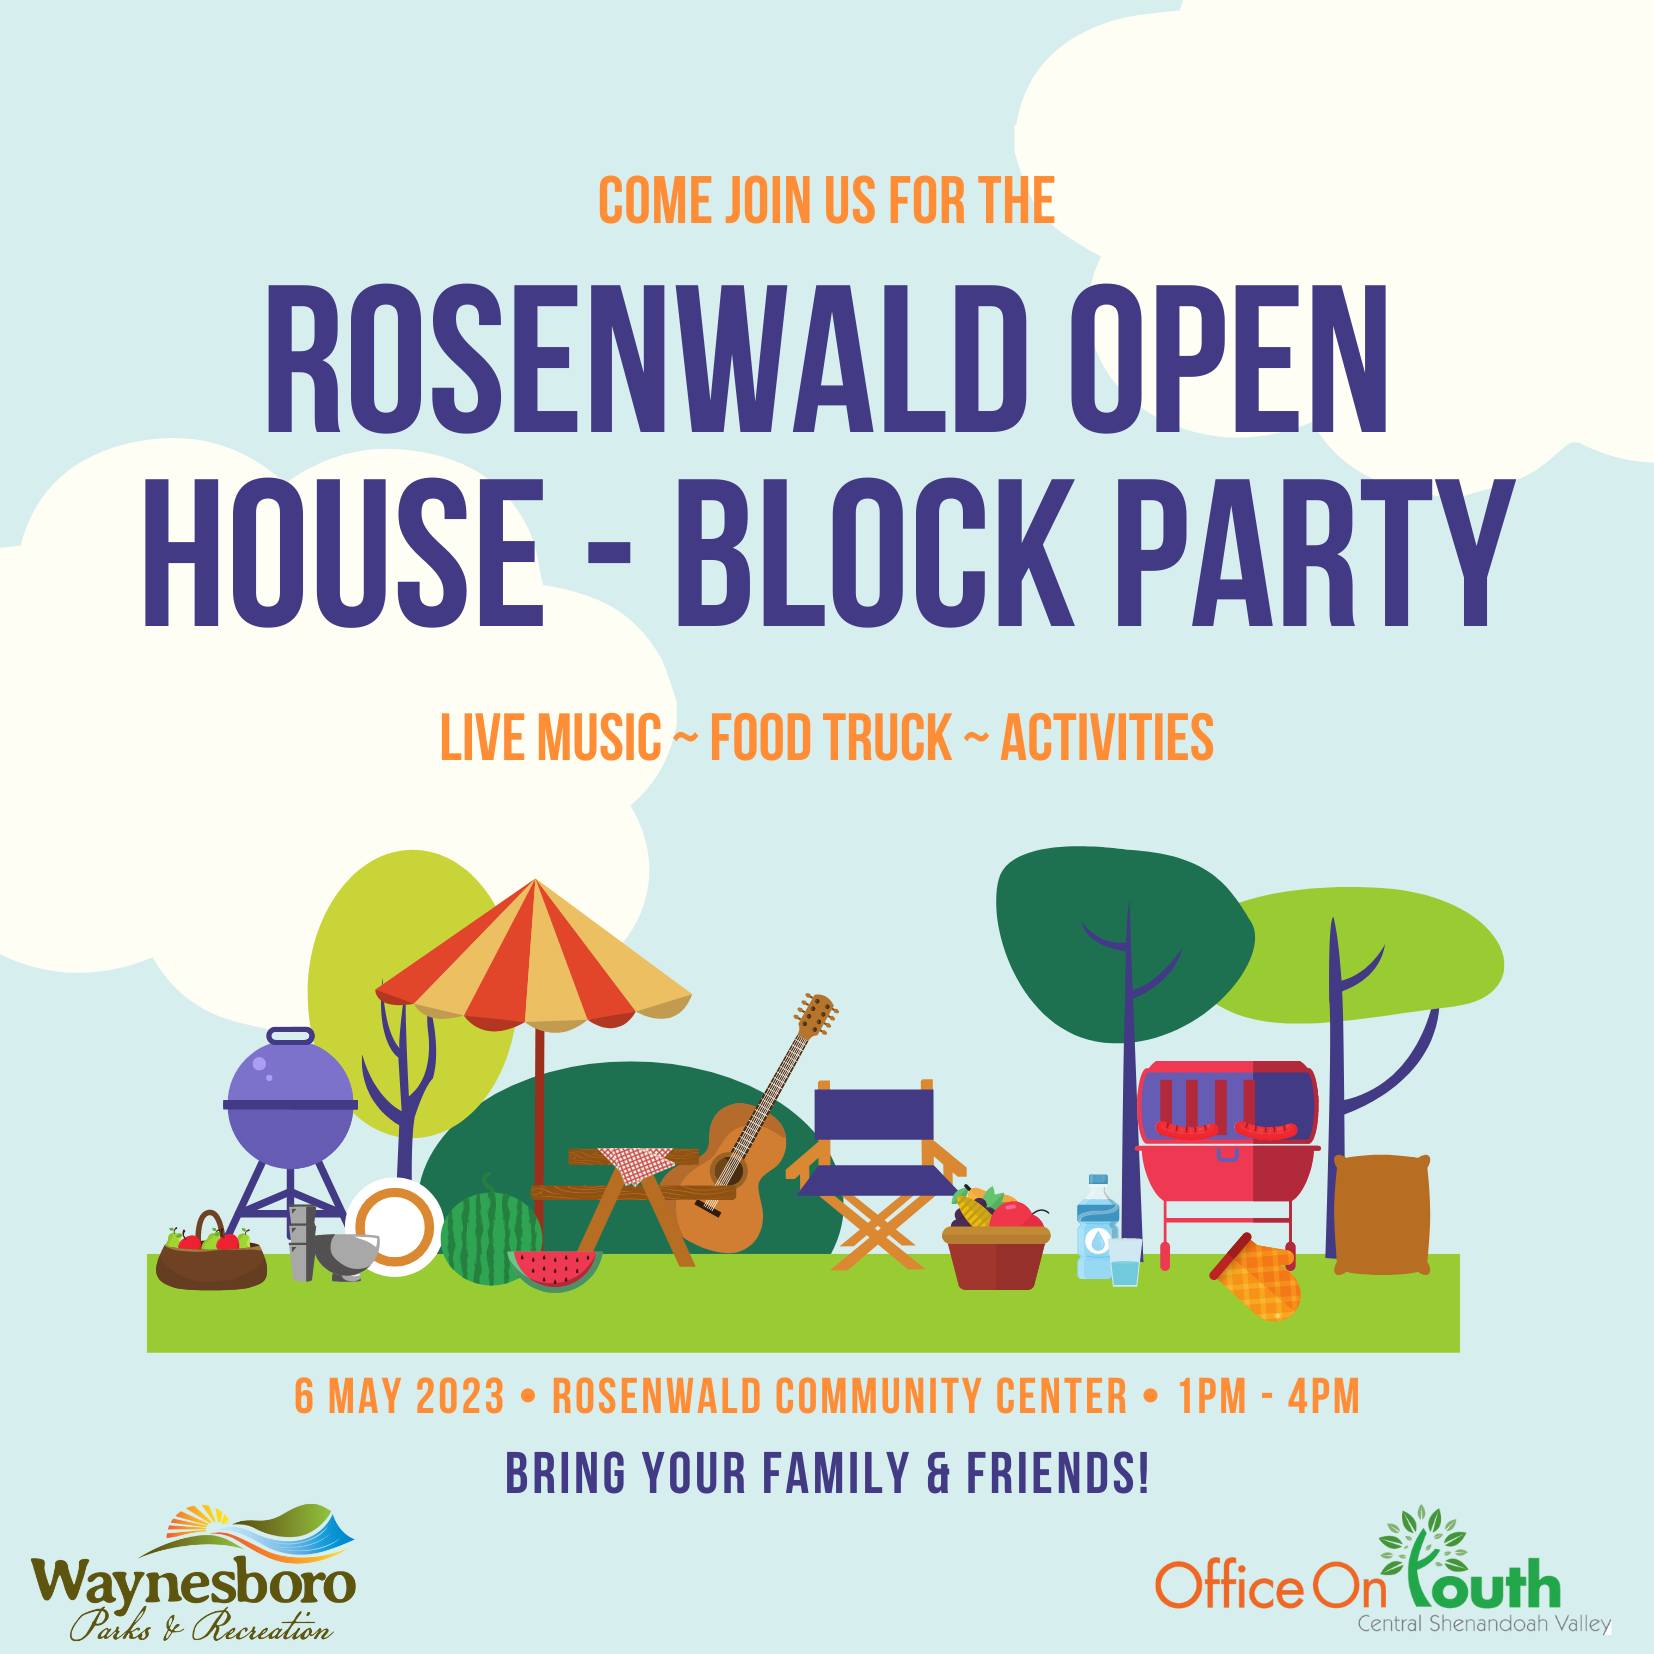 Rosenwald Open House - Block Party